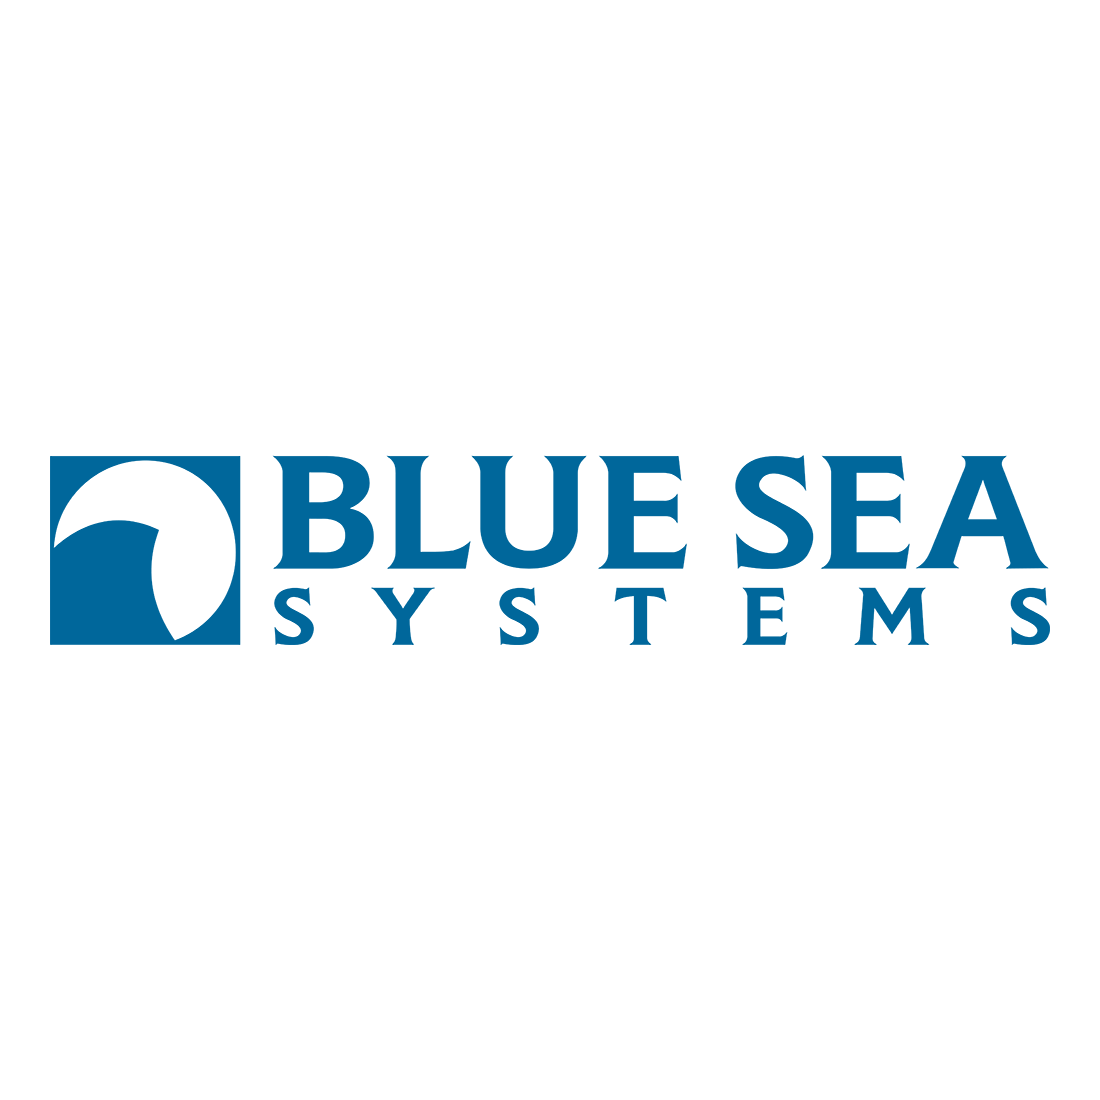 Blue Sea Systems